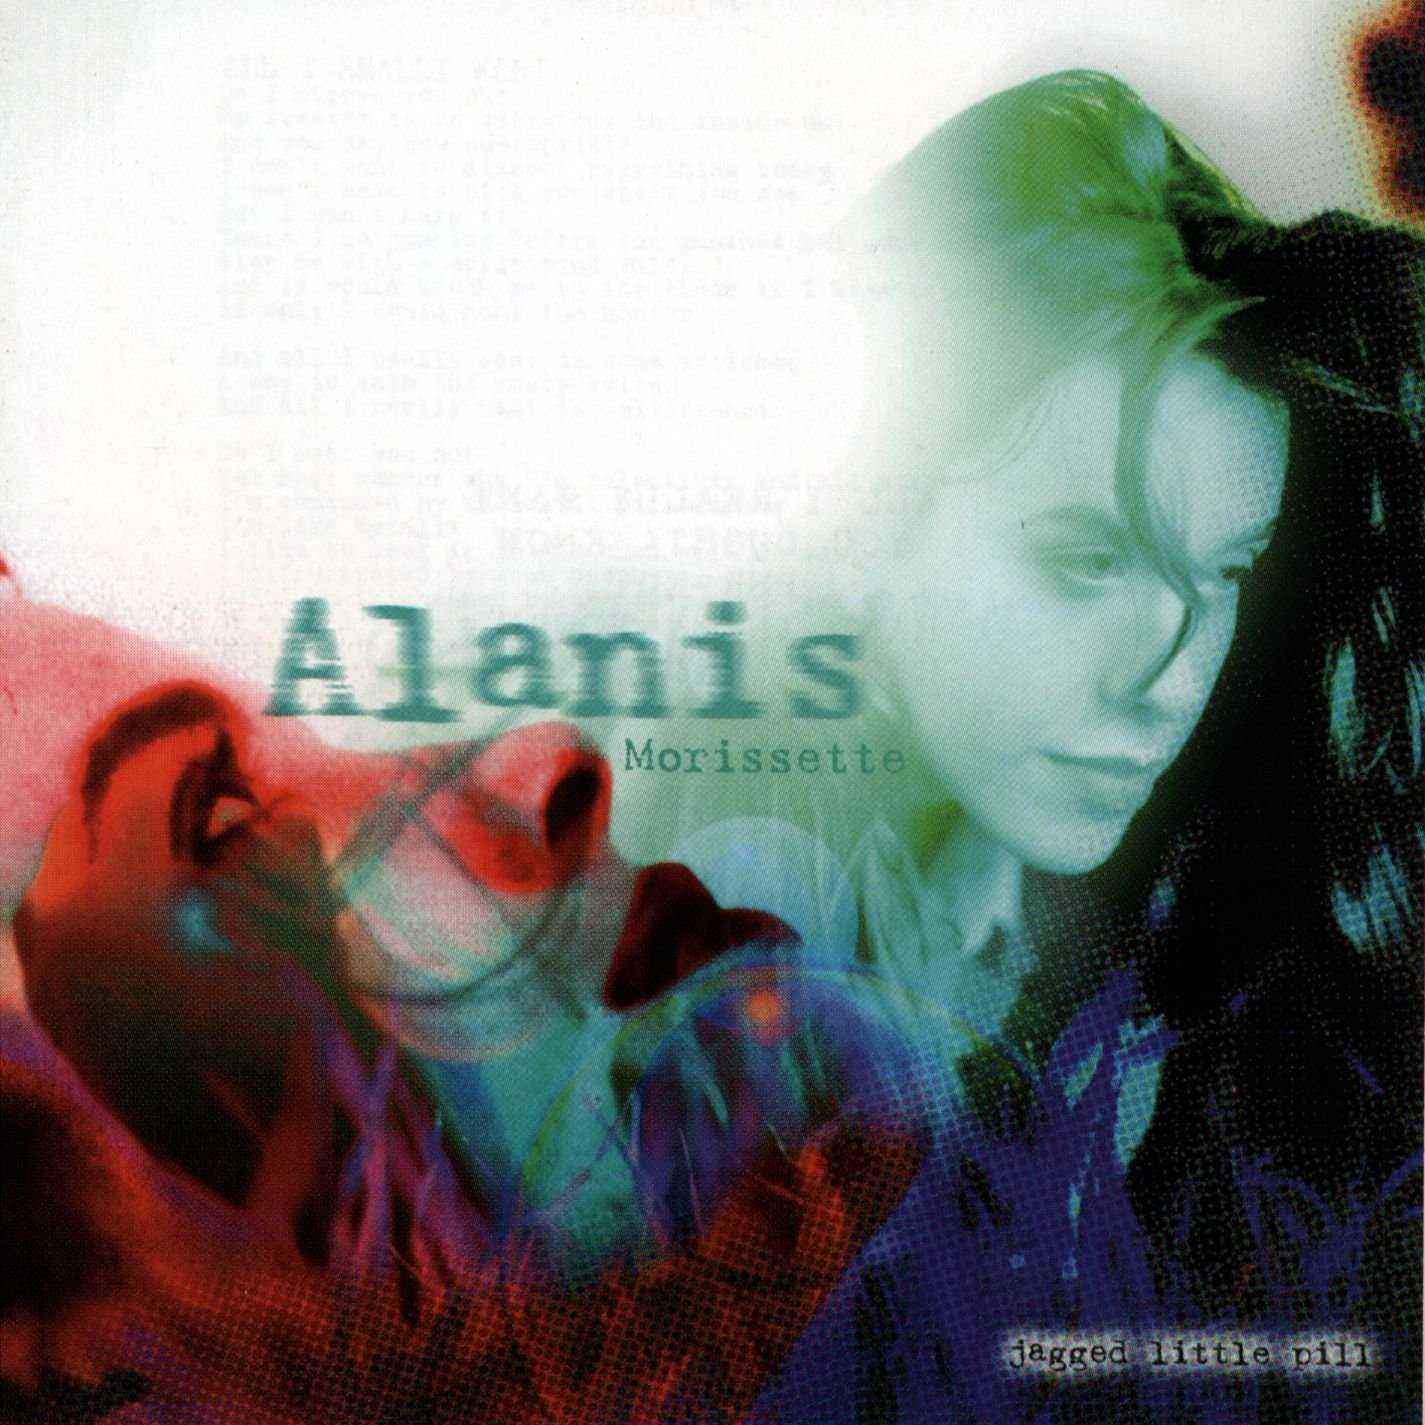 Alanis Morissette Jagged Little Pill U.S. Version